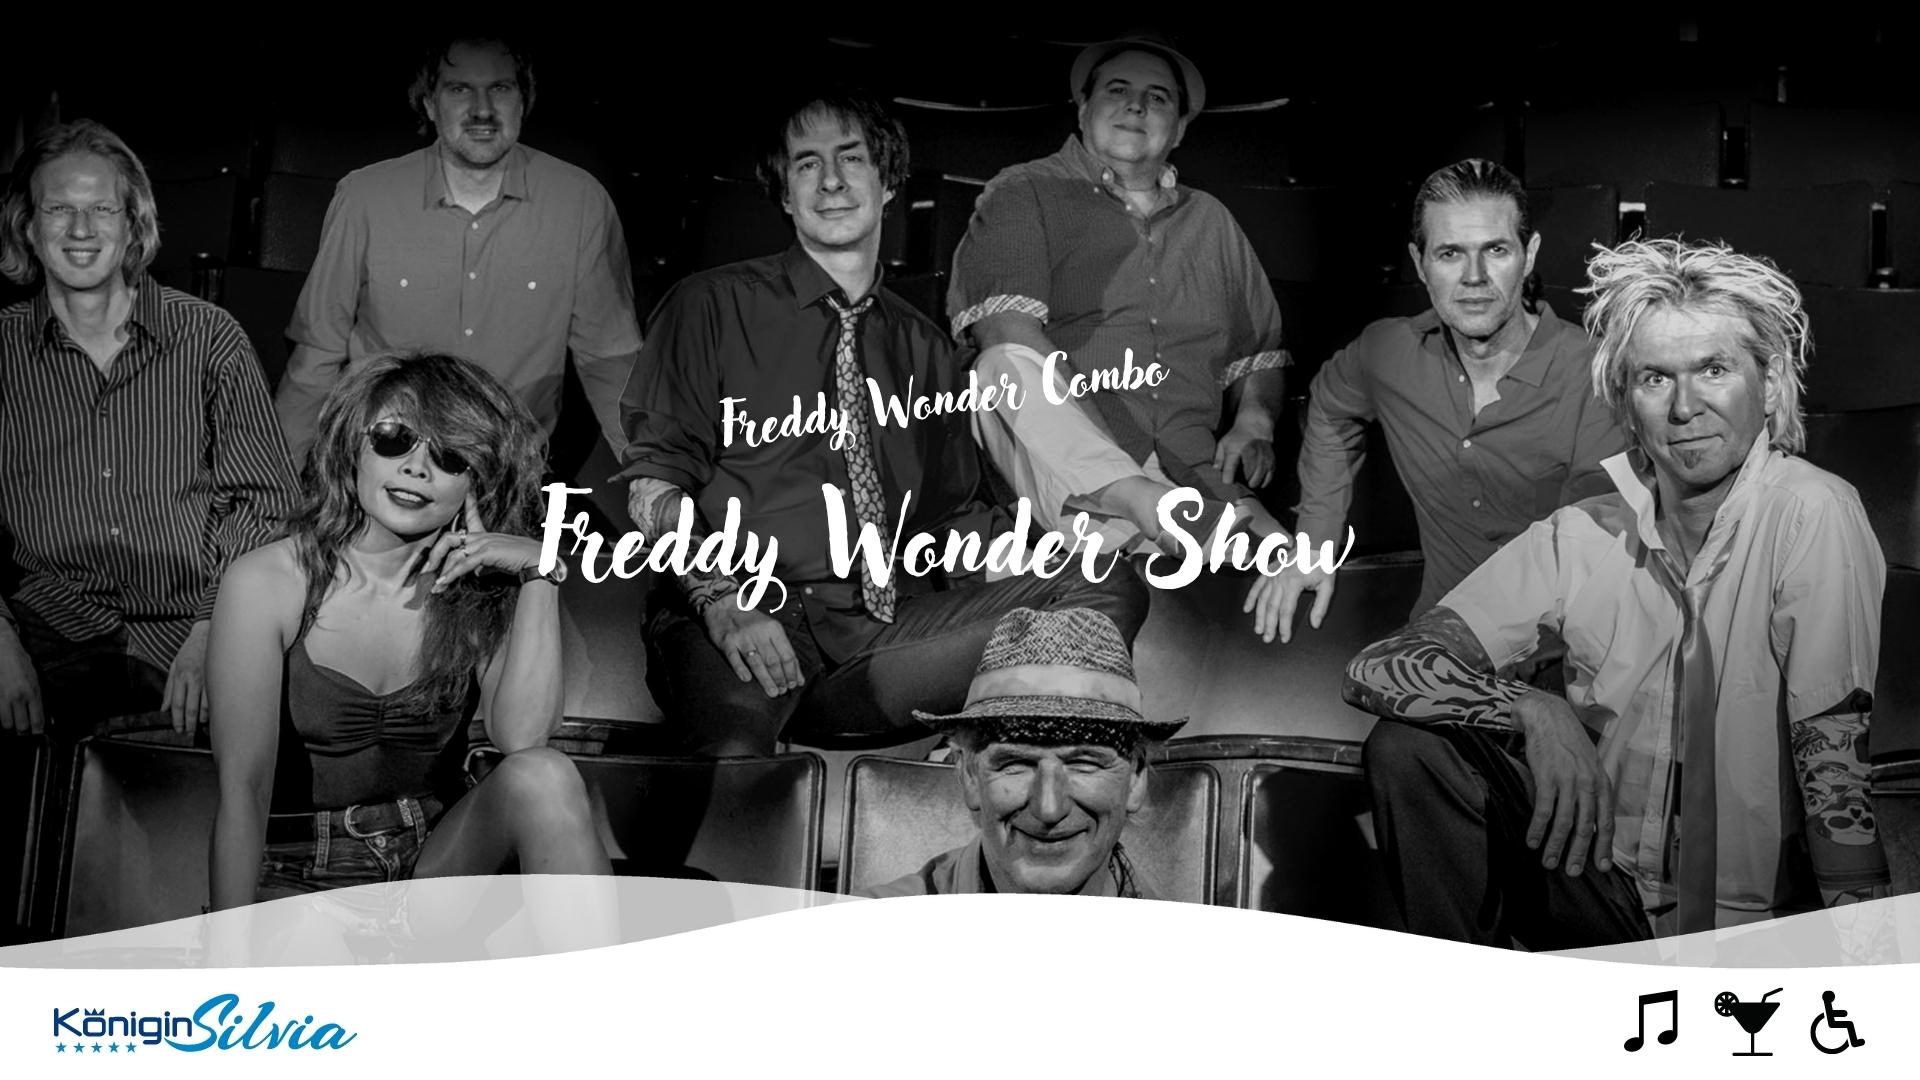 The Freddy Wonder Show Heidelberg